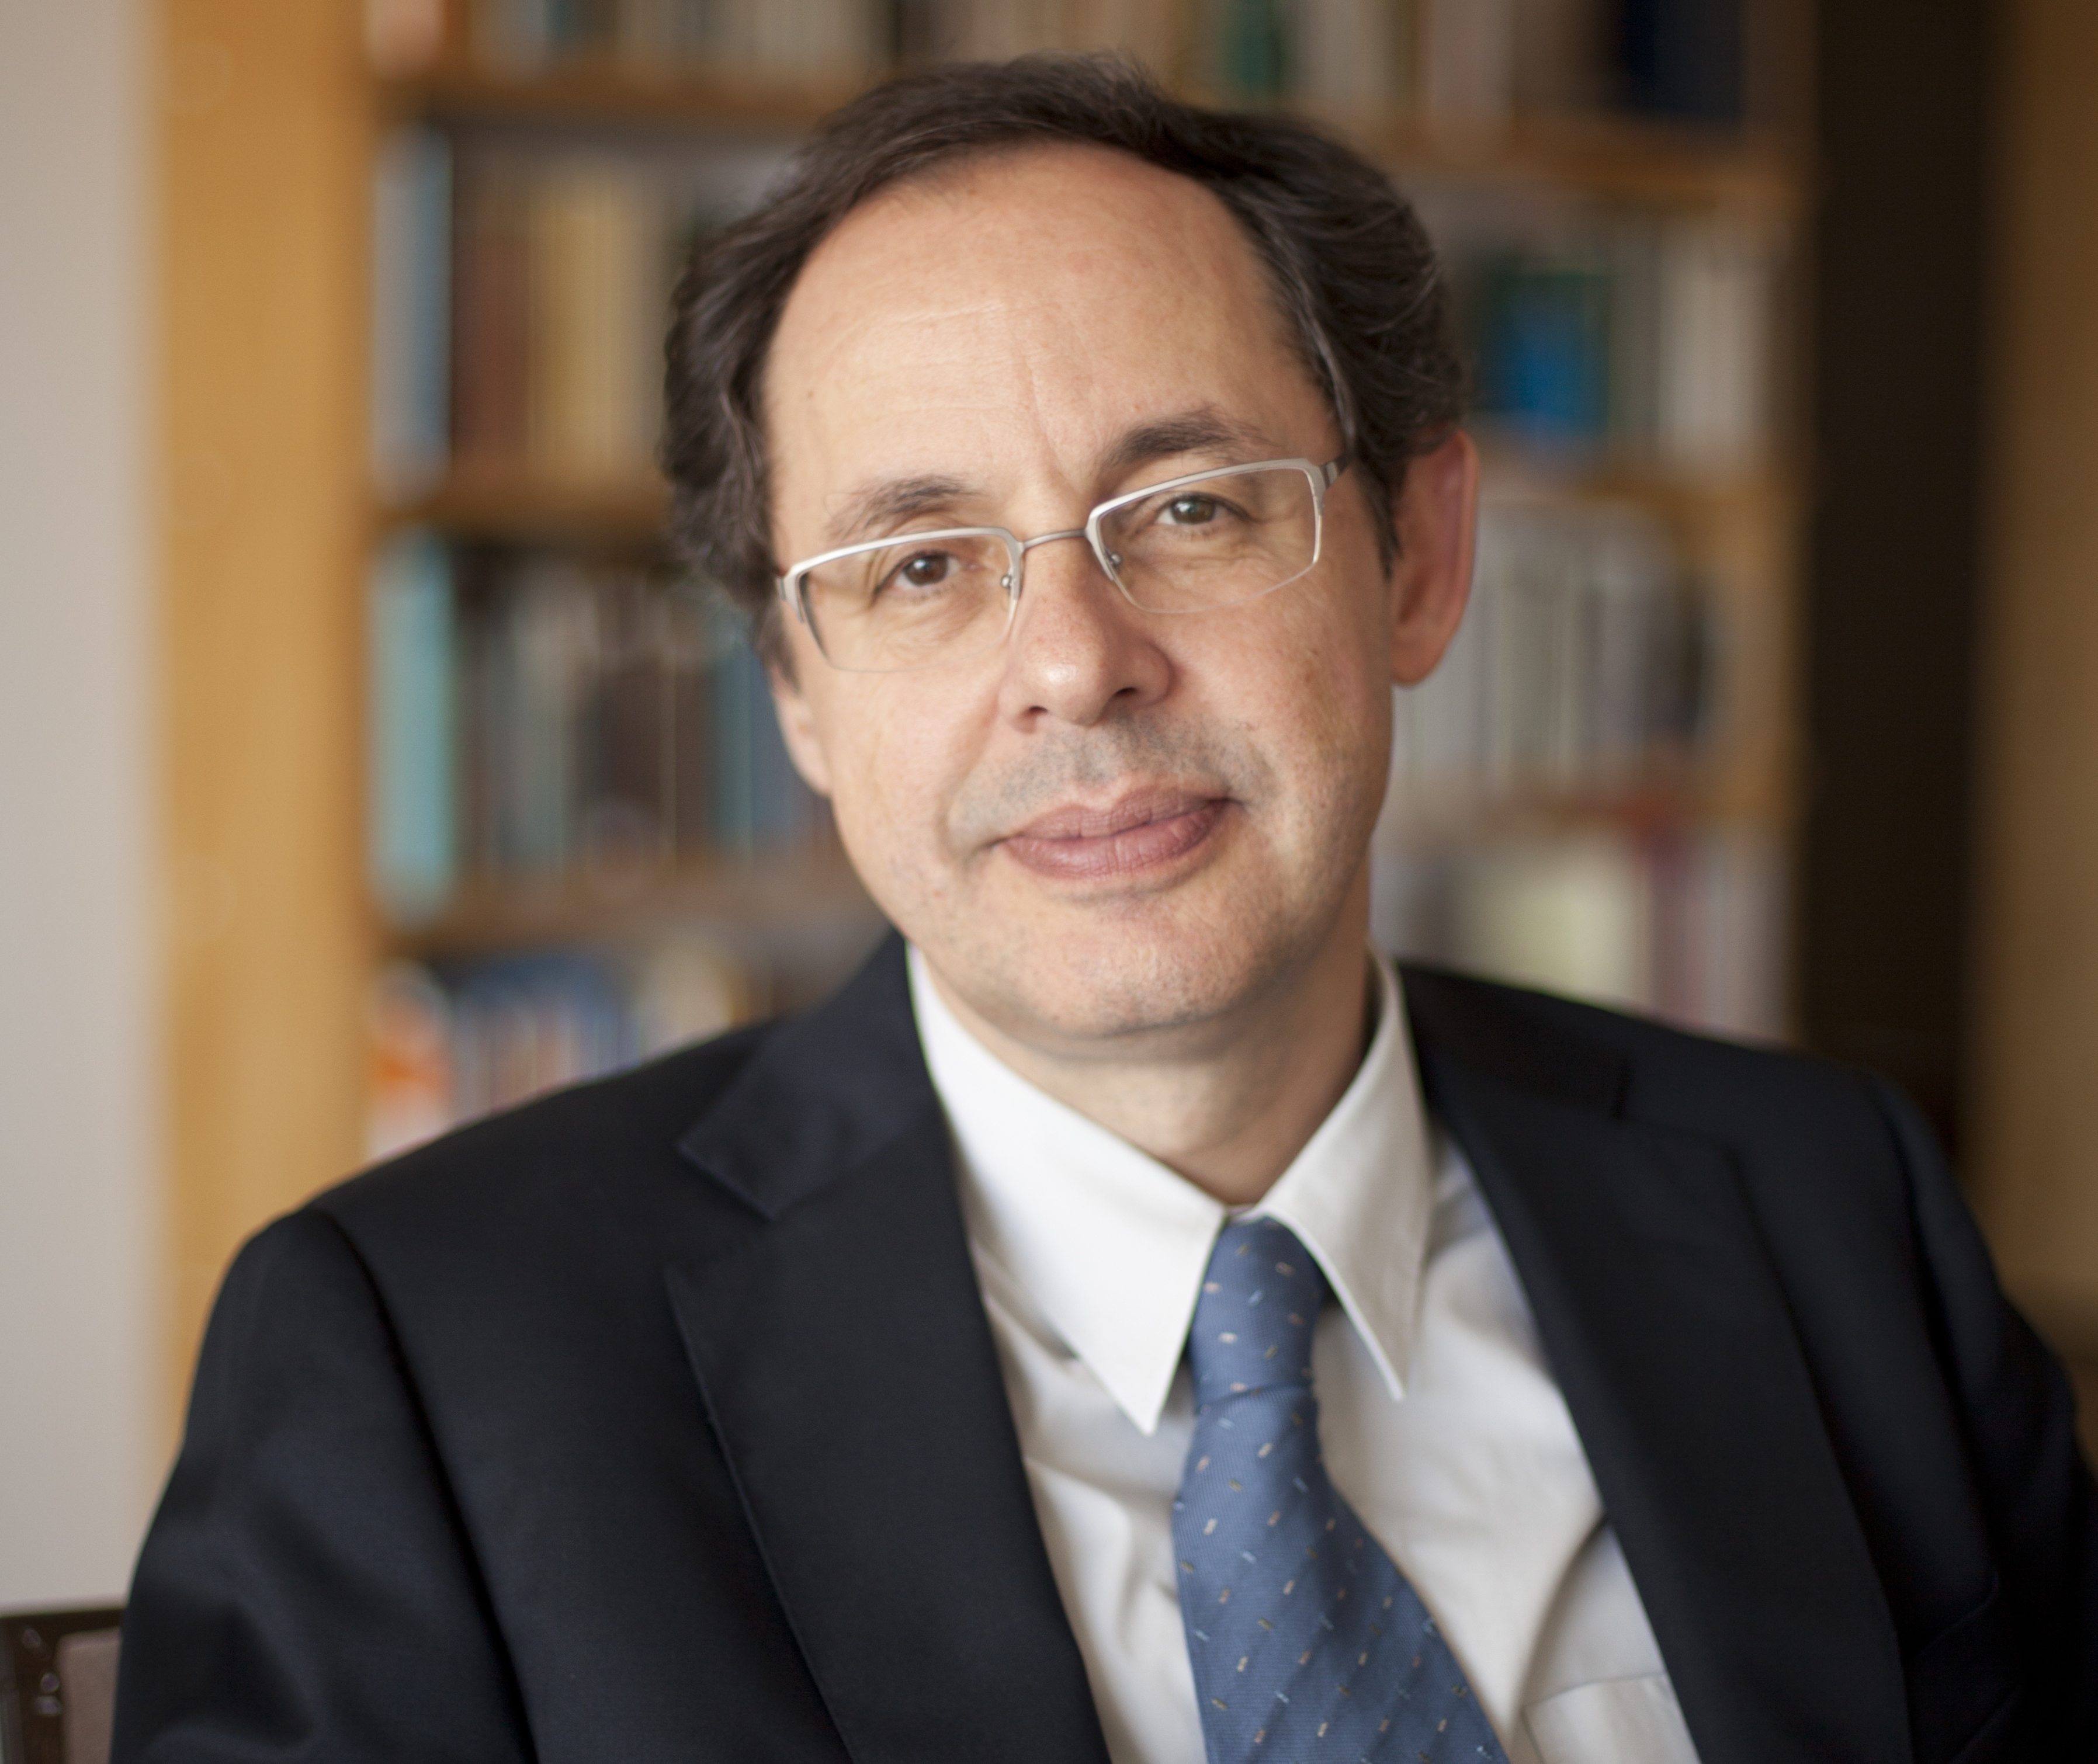 Eduardo Giannetti da Fonseca palestras de economia